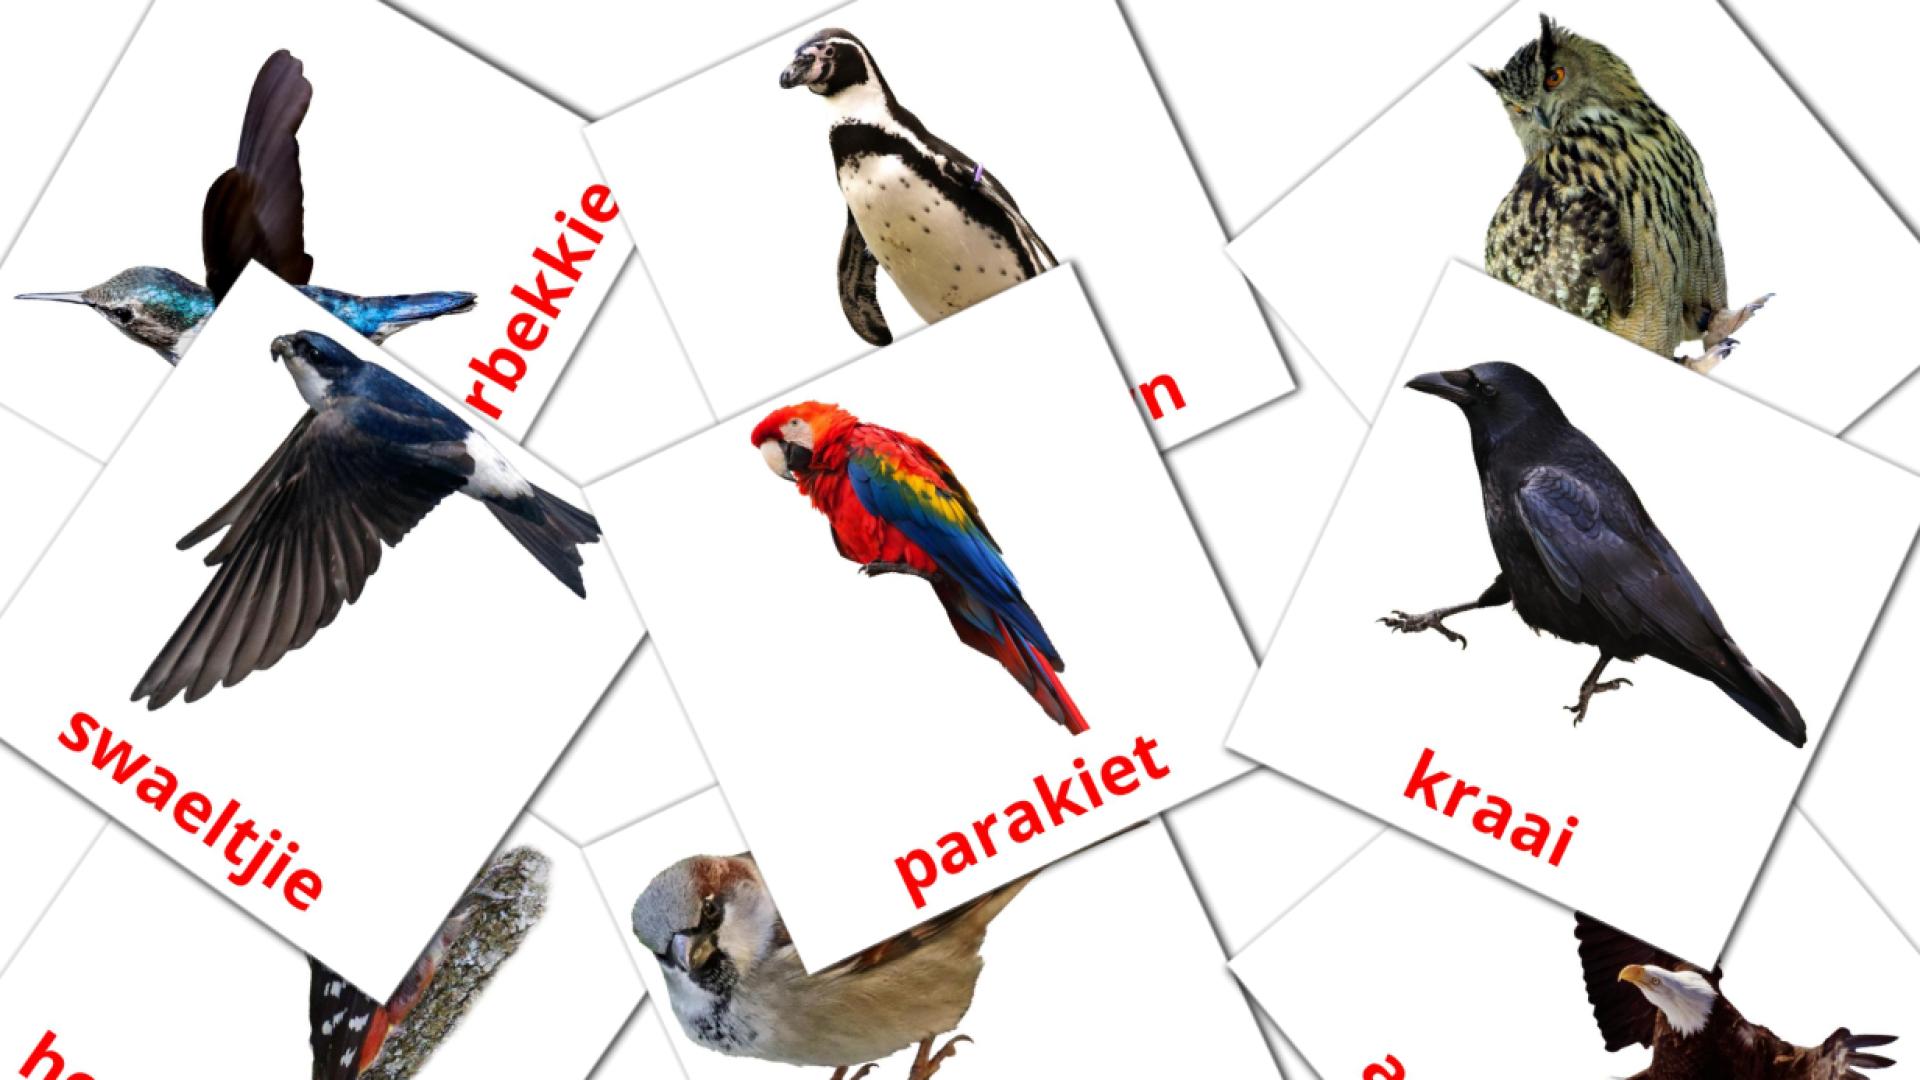 Wild birds - afrikaans vocabulary cards